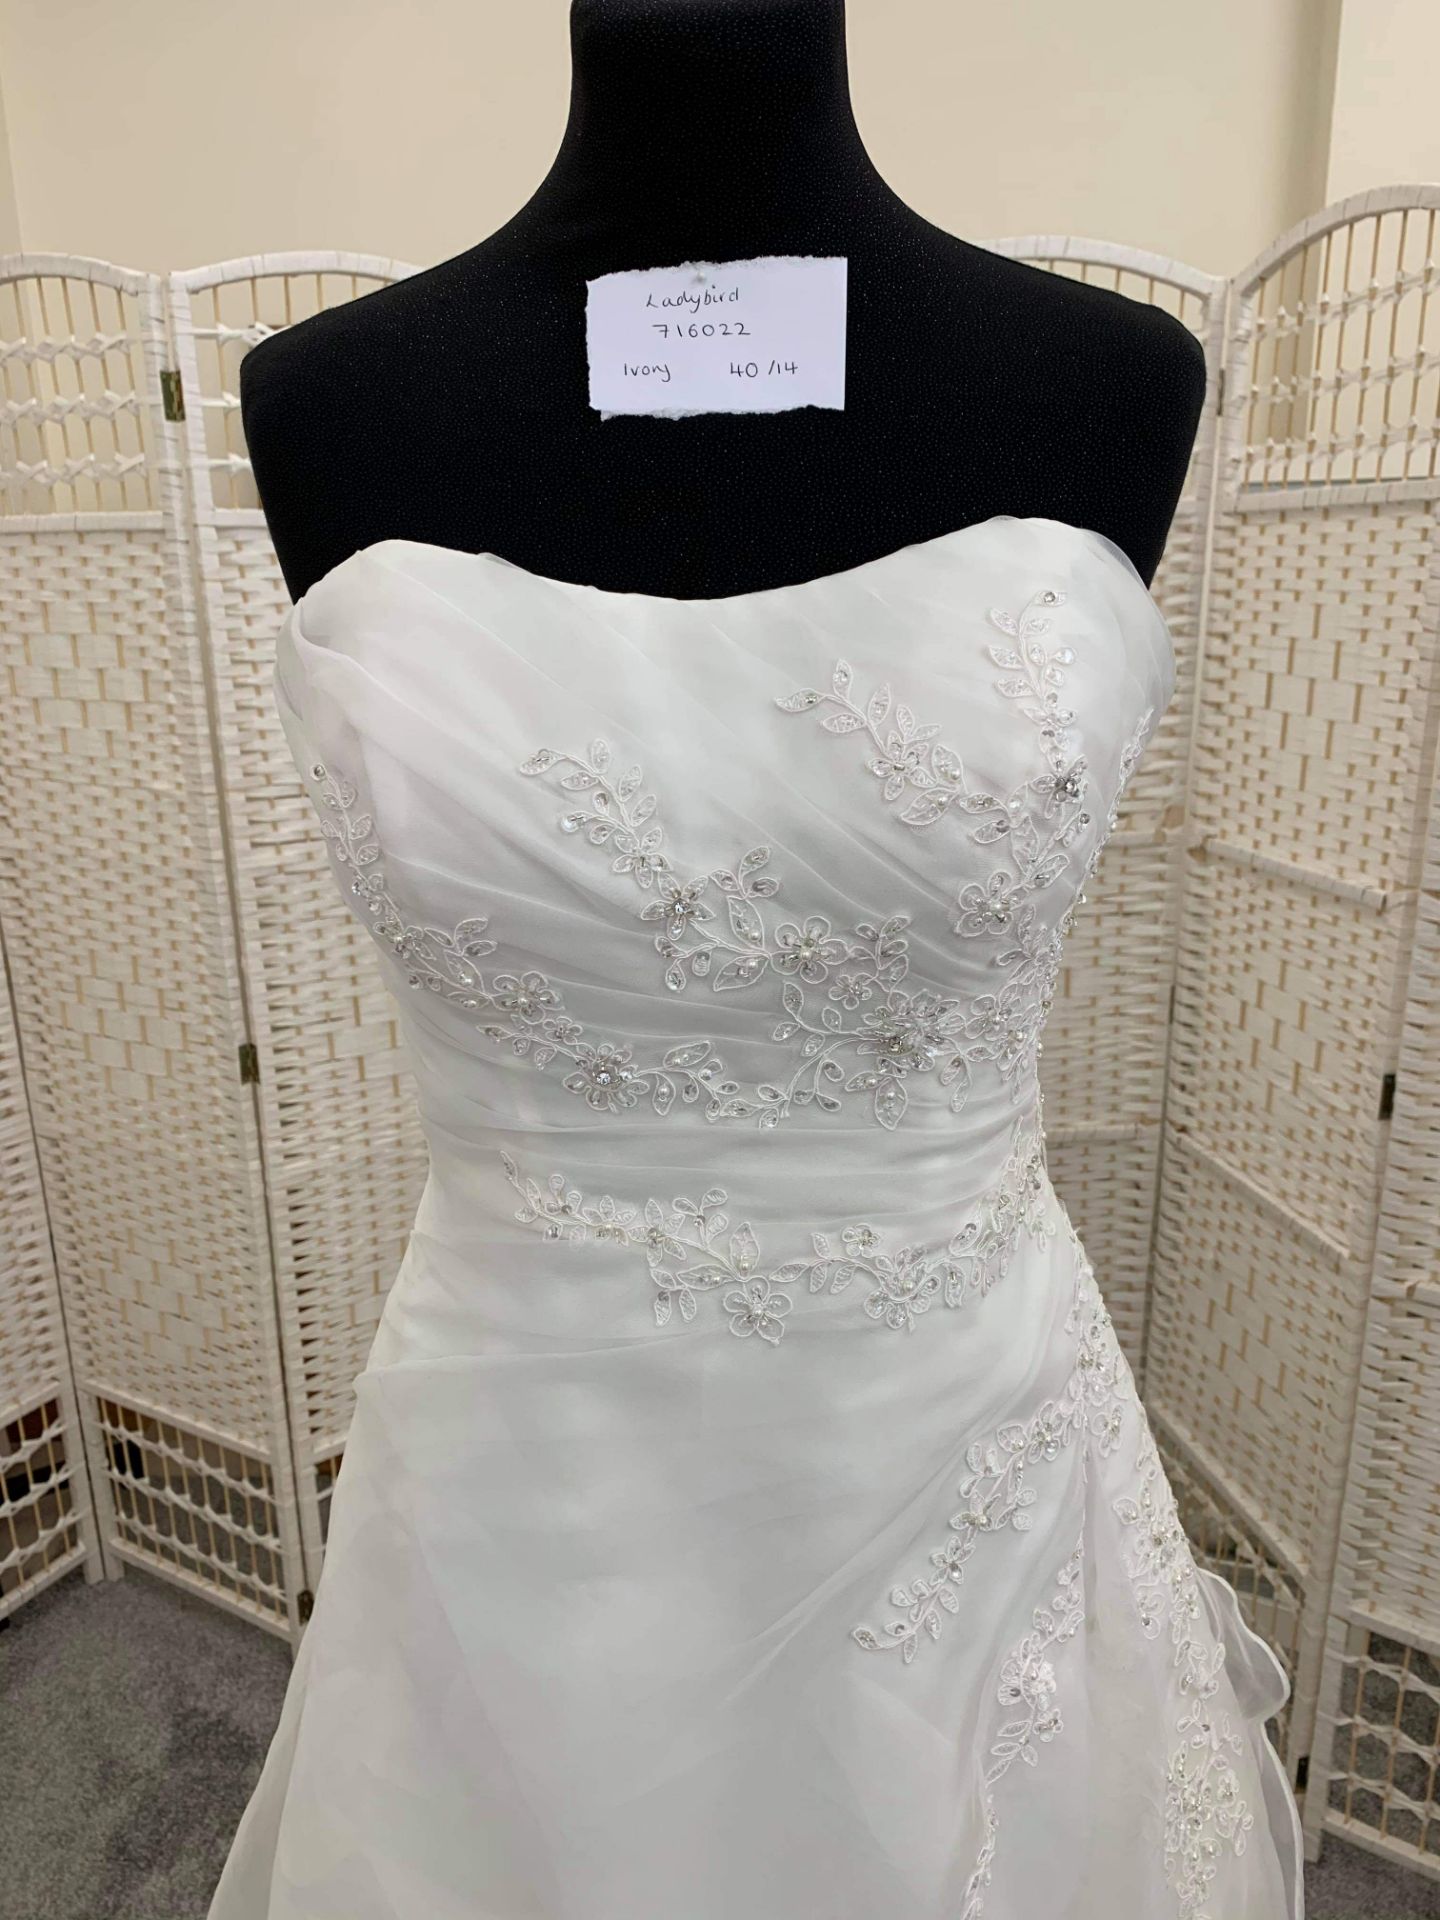 Ladybird Wedding Dress Size 10 To 12. Style No. LB716022